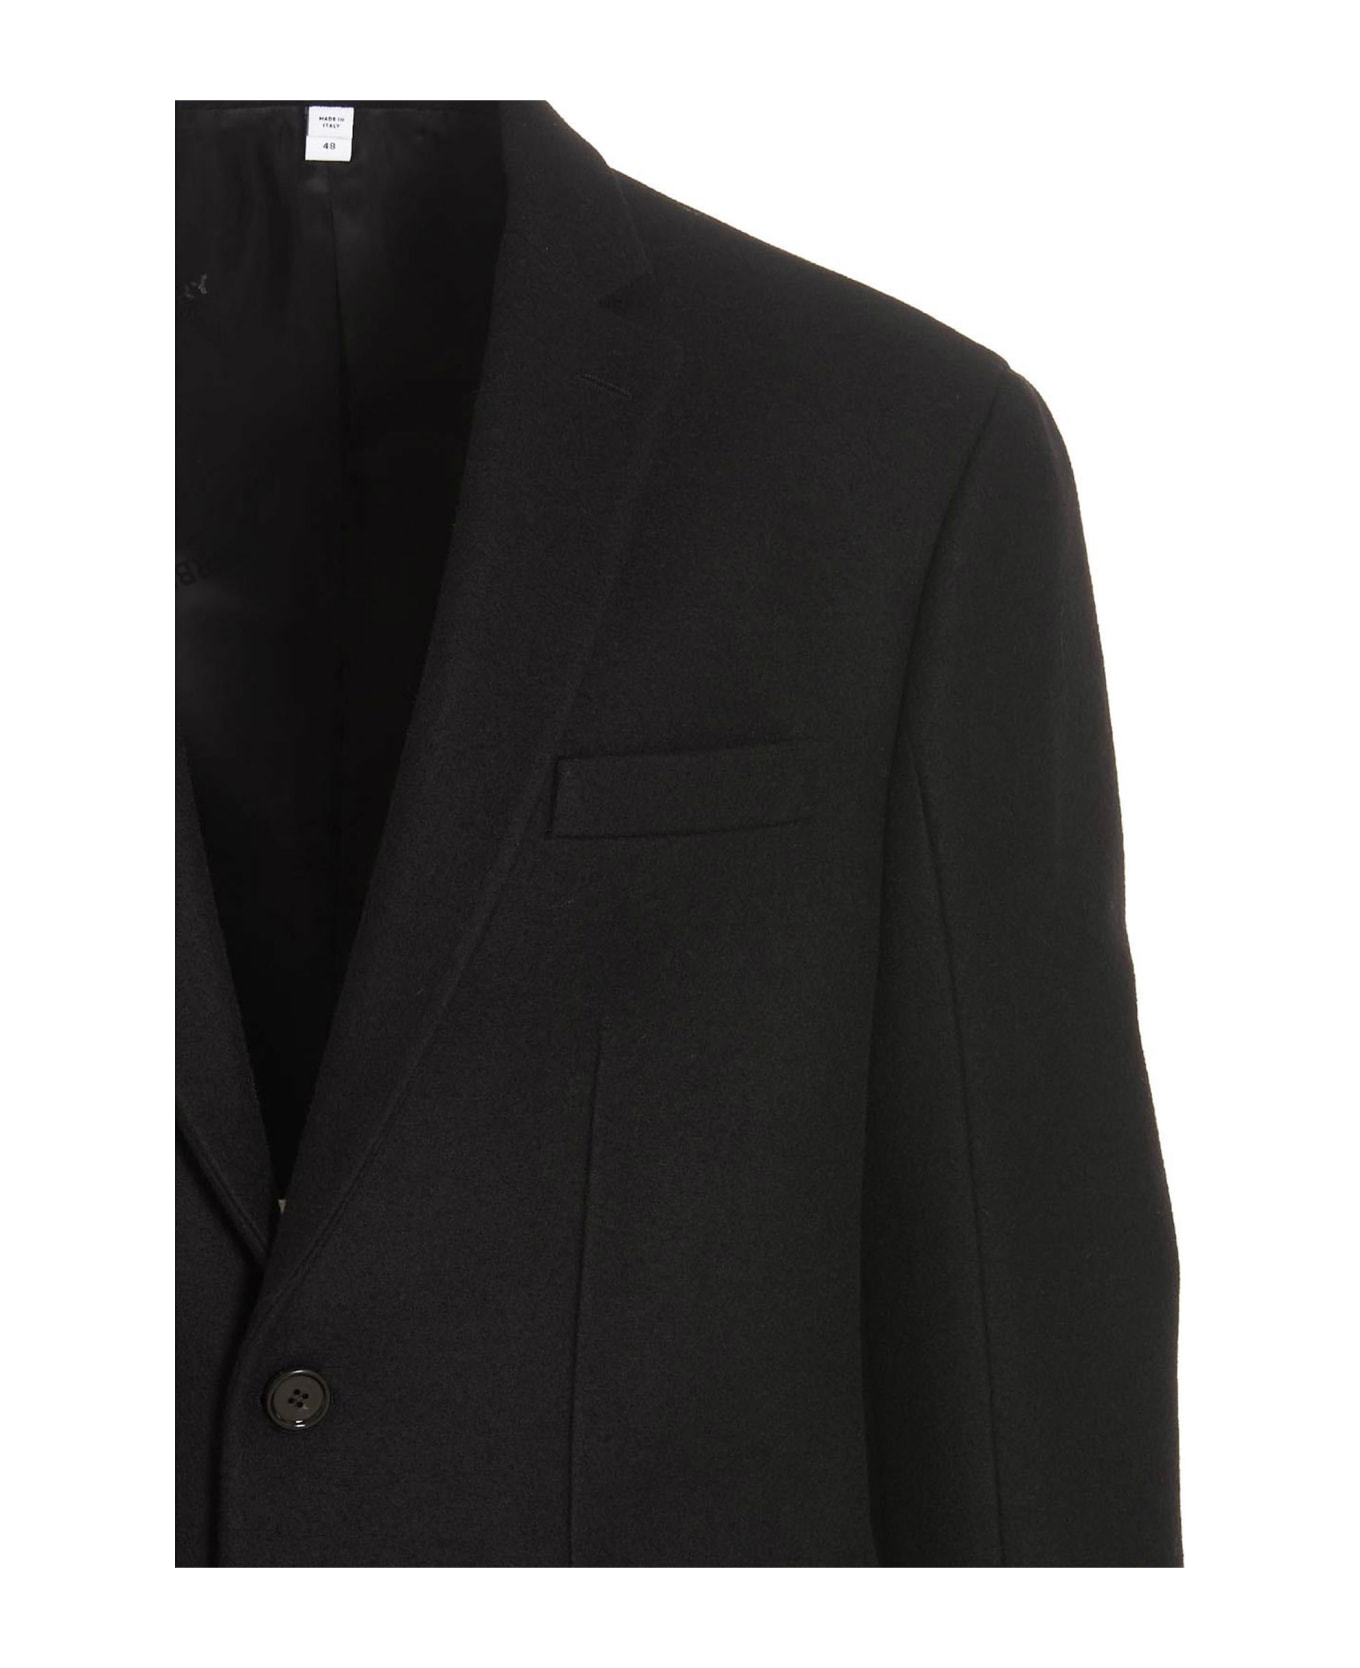 Burberry Wool Tailored Blazer Jacket - Black  